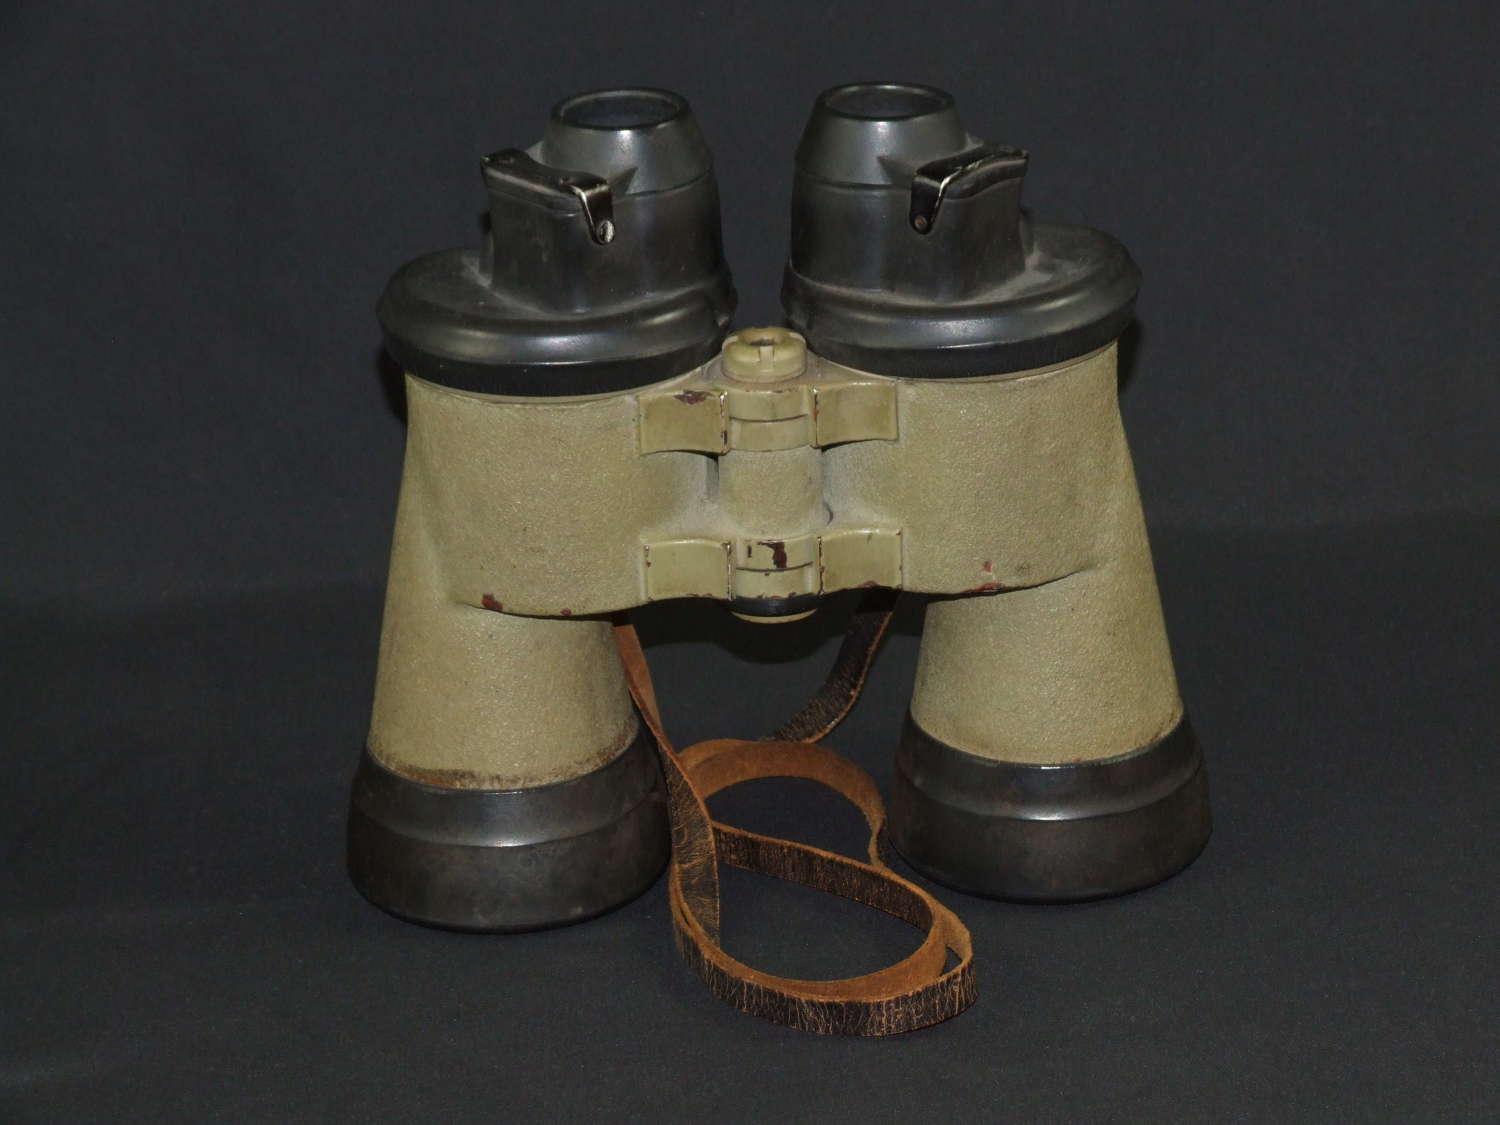 7X50 U-Boat Binoculars